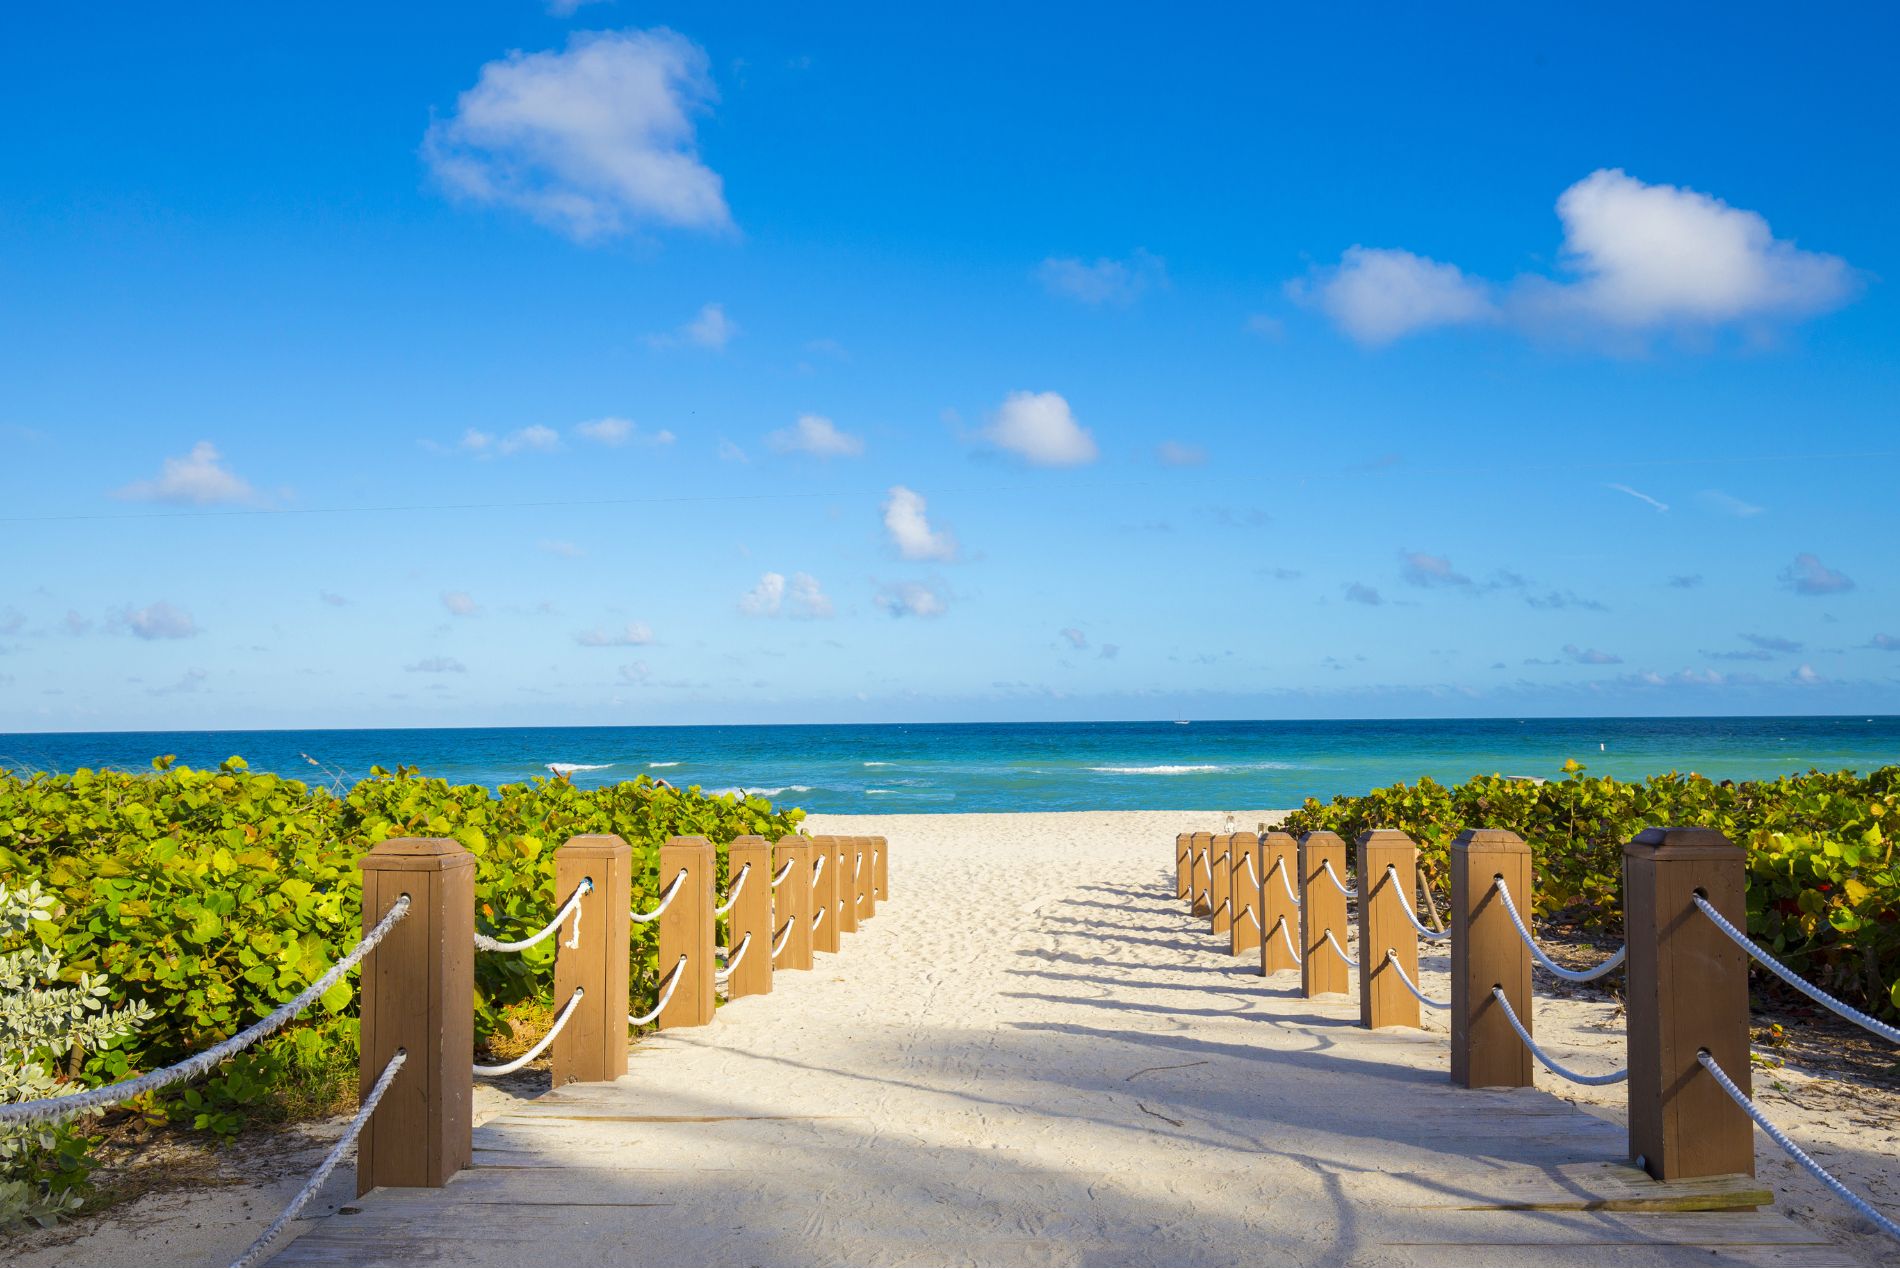 Descubre las mejores playas cerca a Orlando, Florida